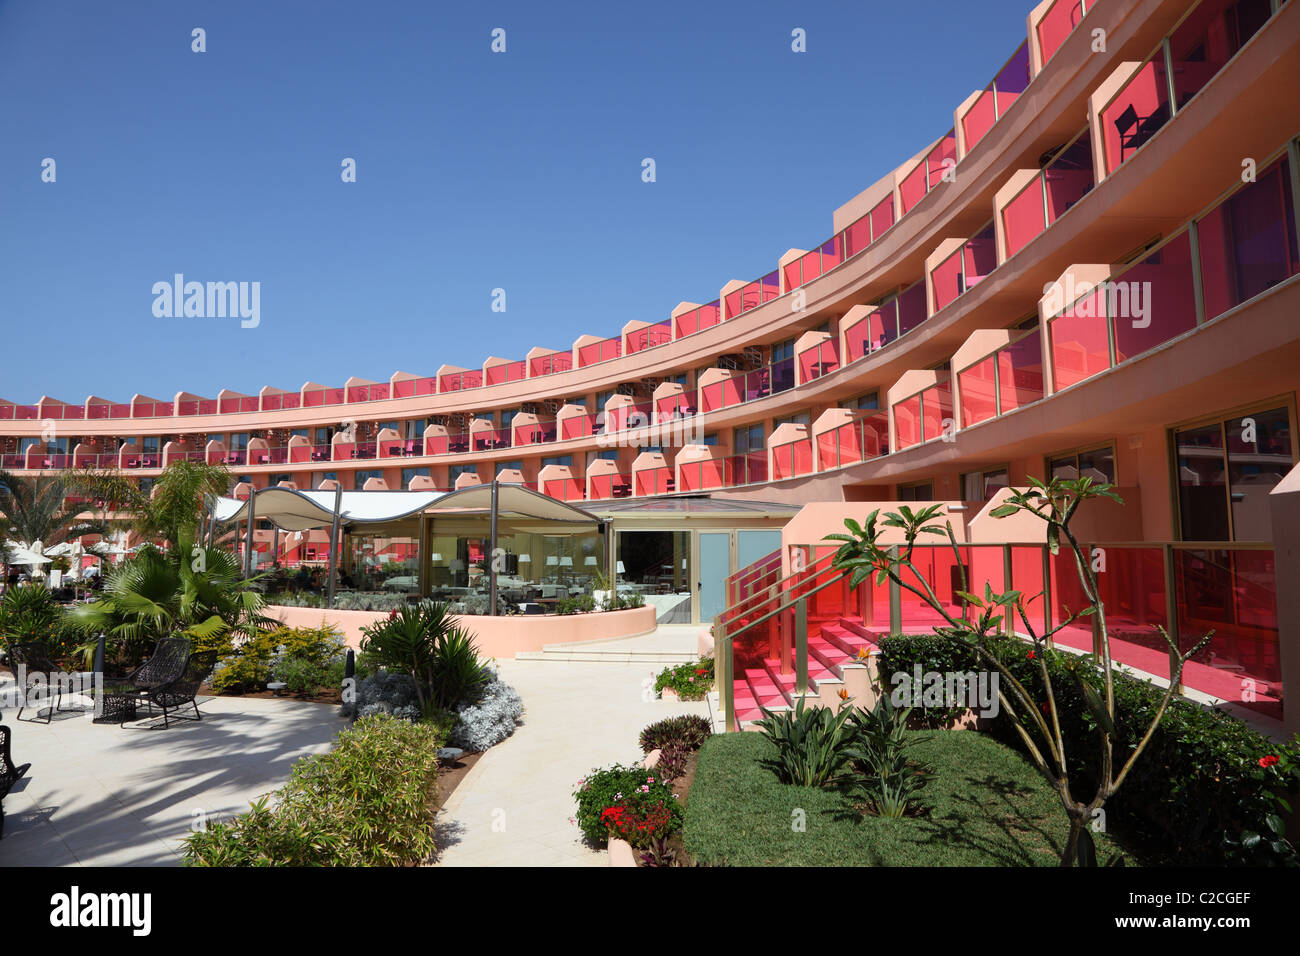 Hotel building on Canary Island Tenerife, Spain Stock Photo